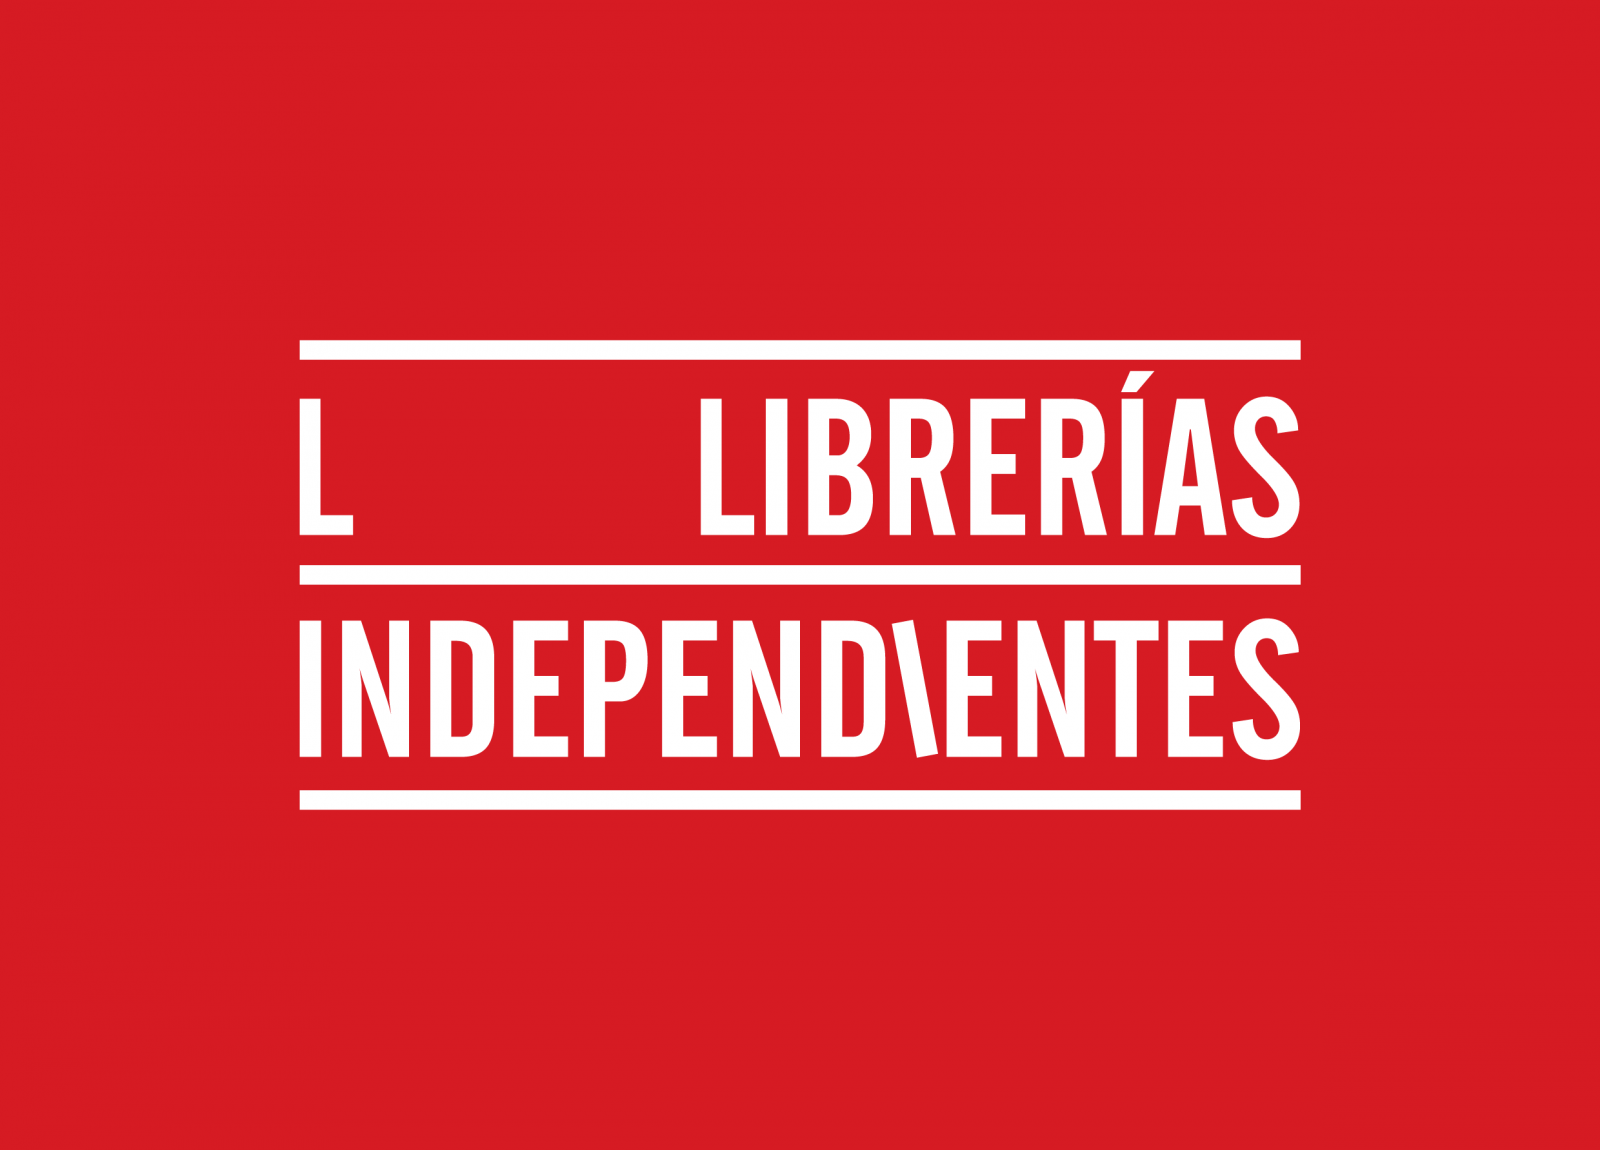 L-LIBRERIAS INDEPENDIENTES, S.A.